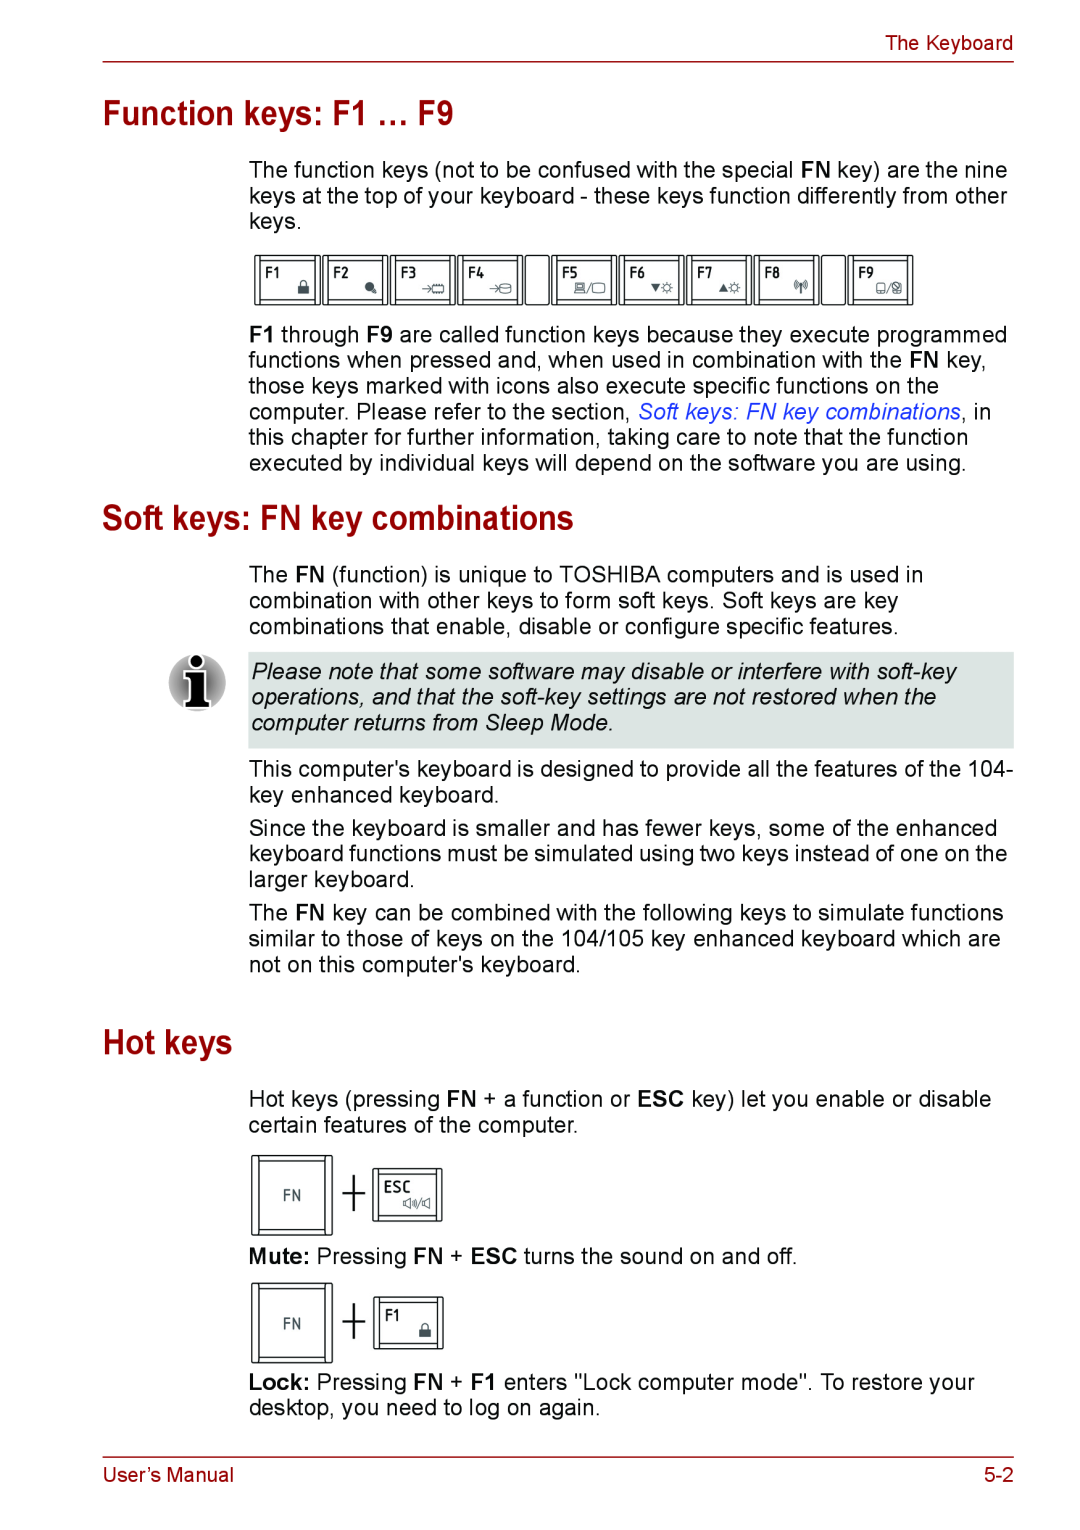 Toshiba PSC08U-02D01D user manual Function keys F1 … F9, Soft keys FN key combinations, Hot keys 